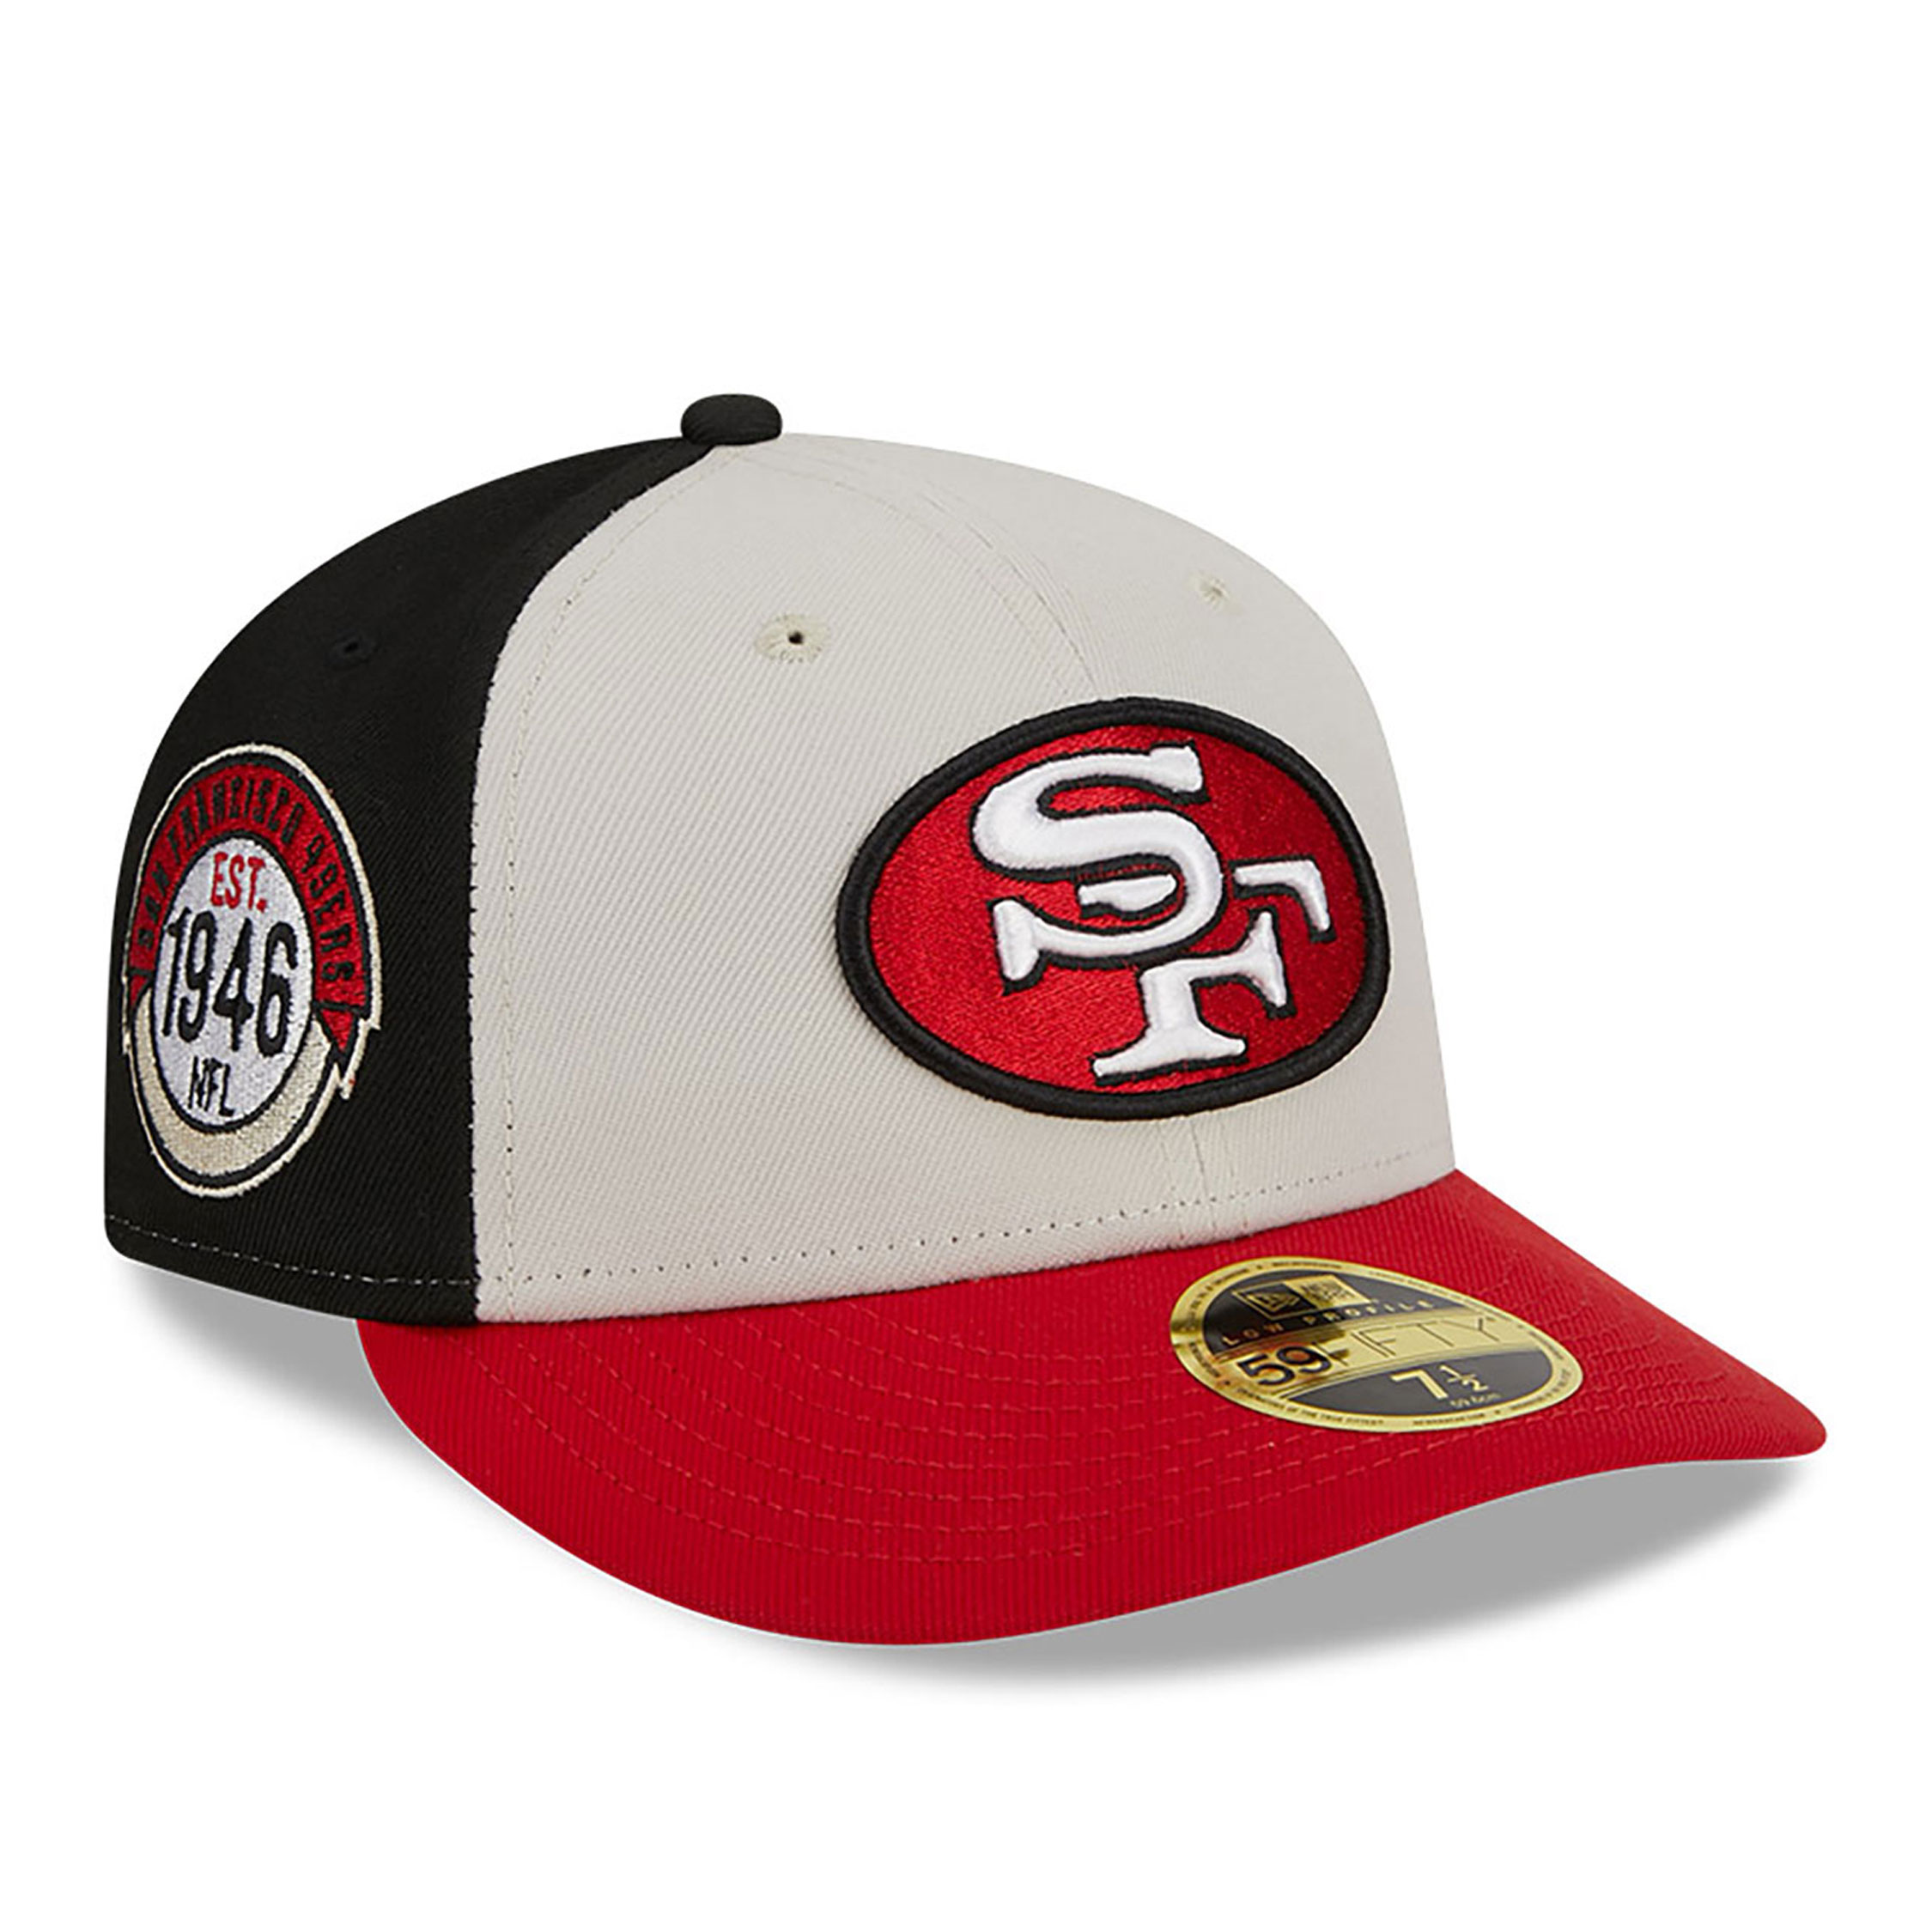 NFL Sideline Headwear, Caps & Hats New Era Cap UK